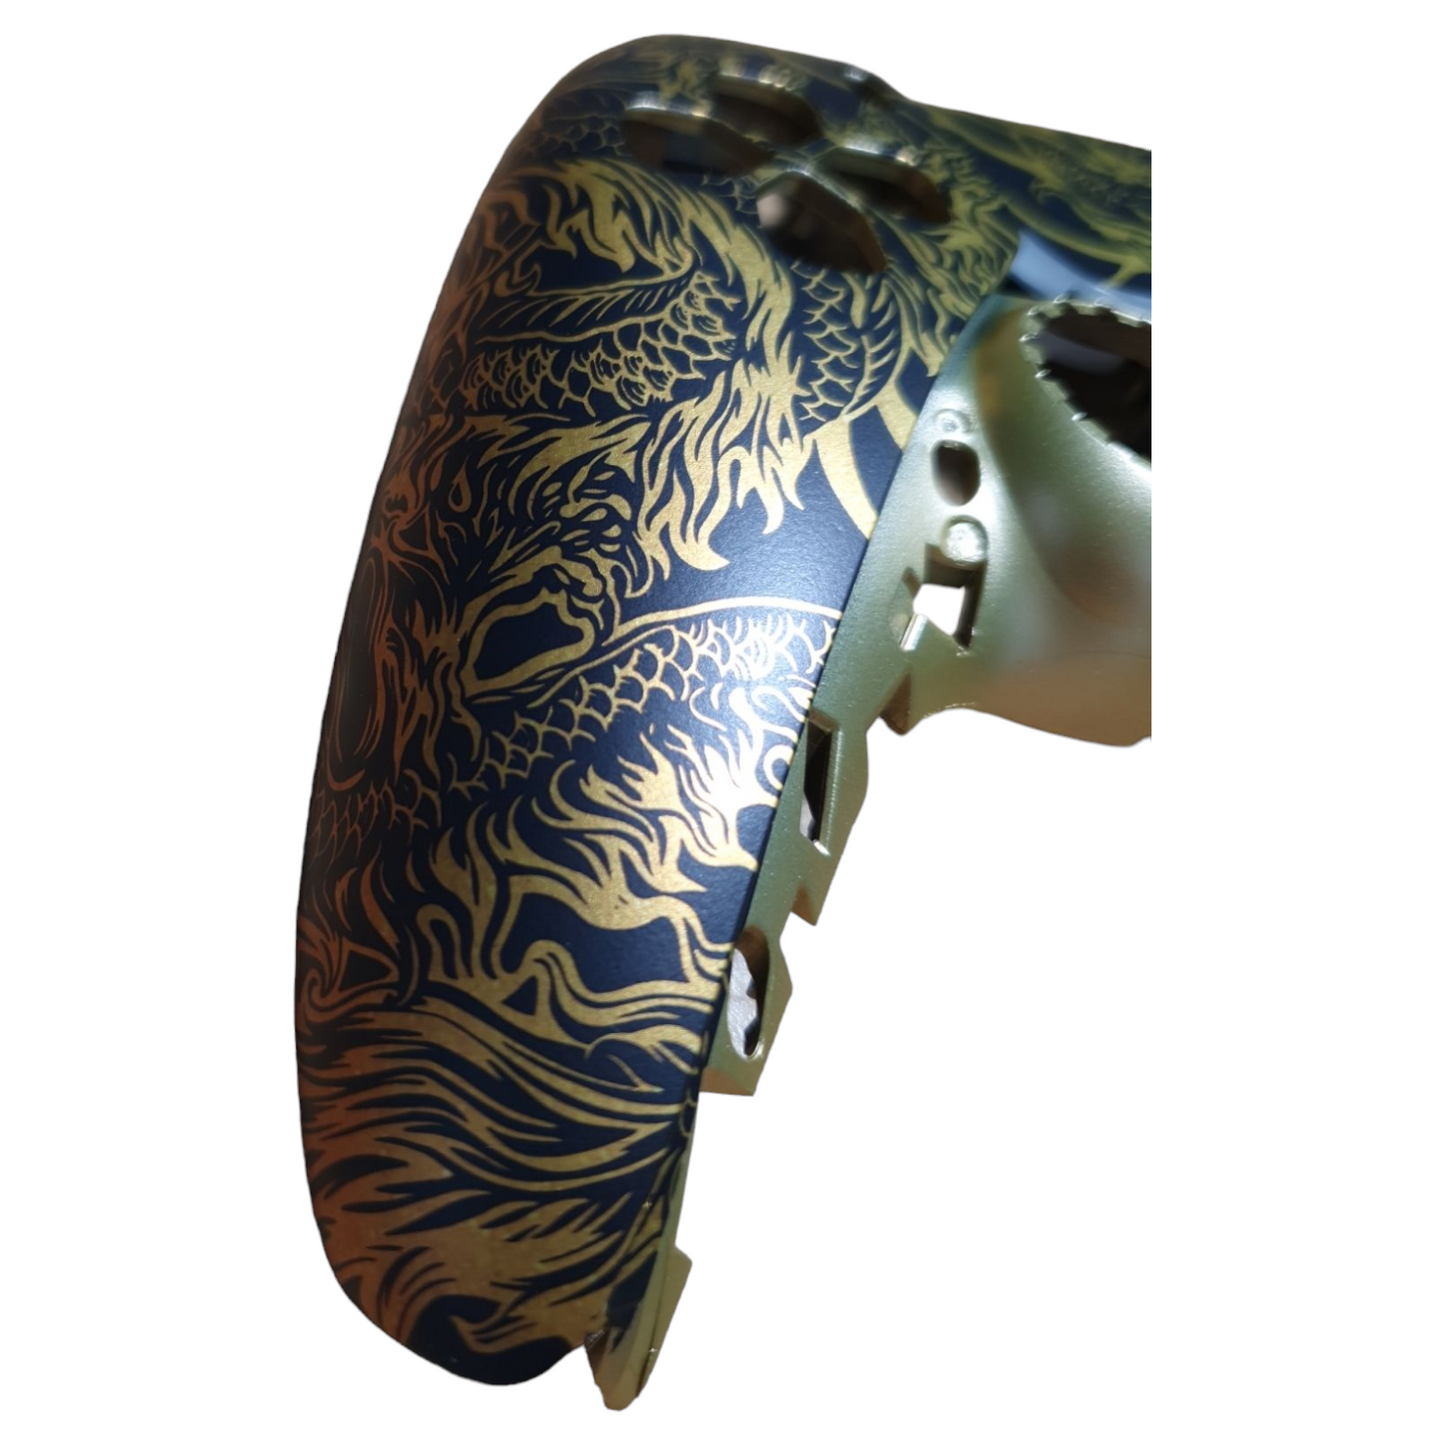 PS5 Controller Faceplate - Golden Dragon